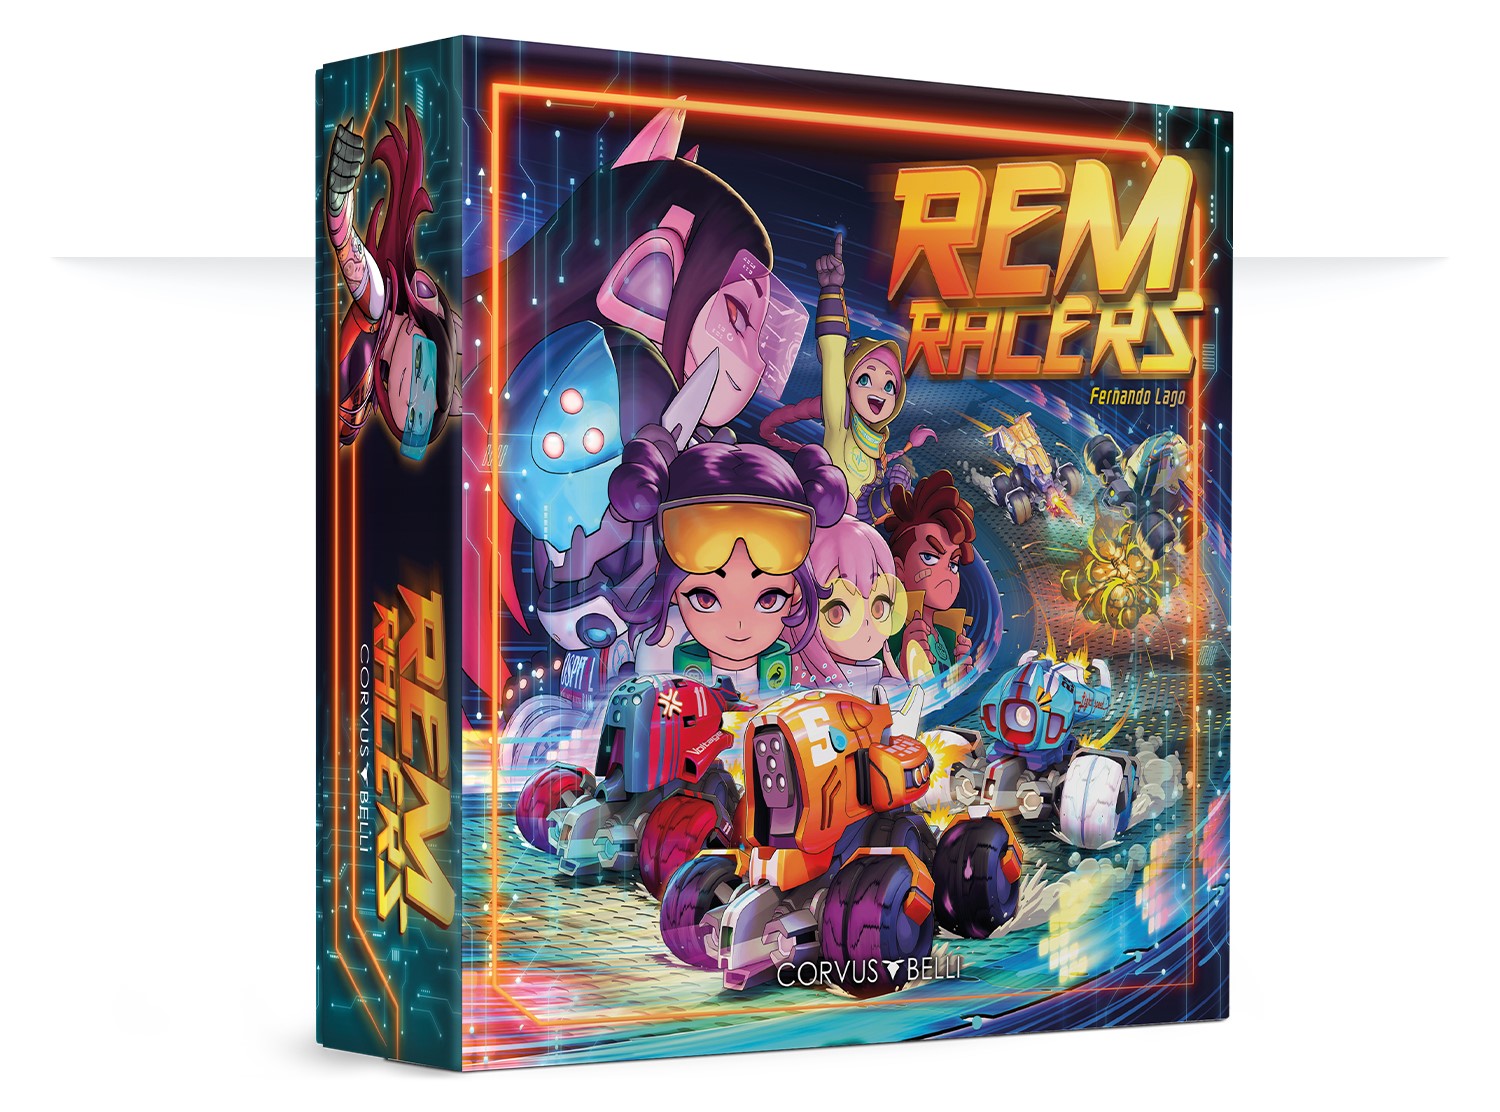 Rem Racers - Corvus Belli FEB